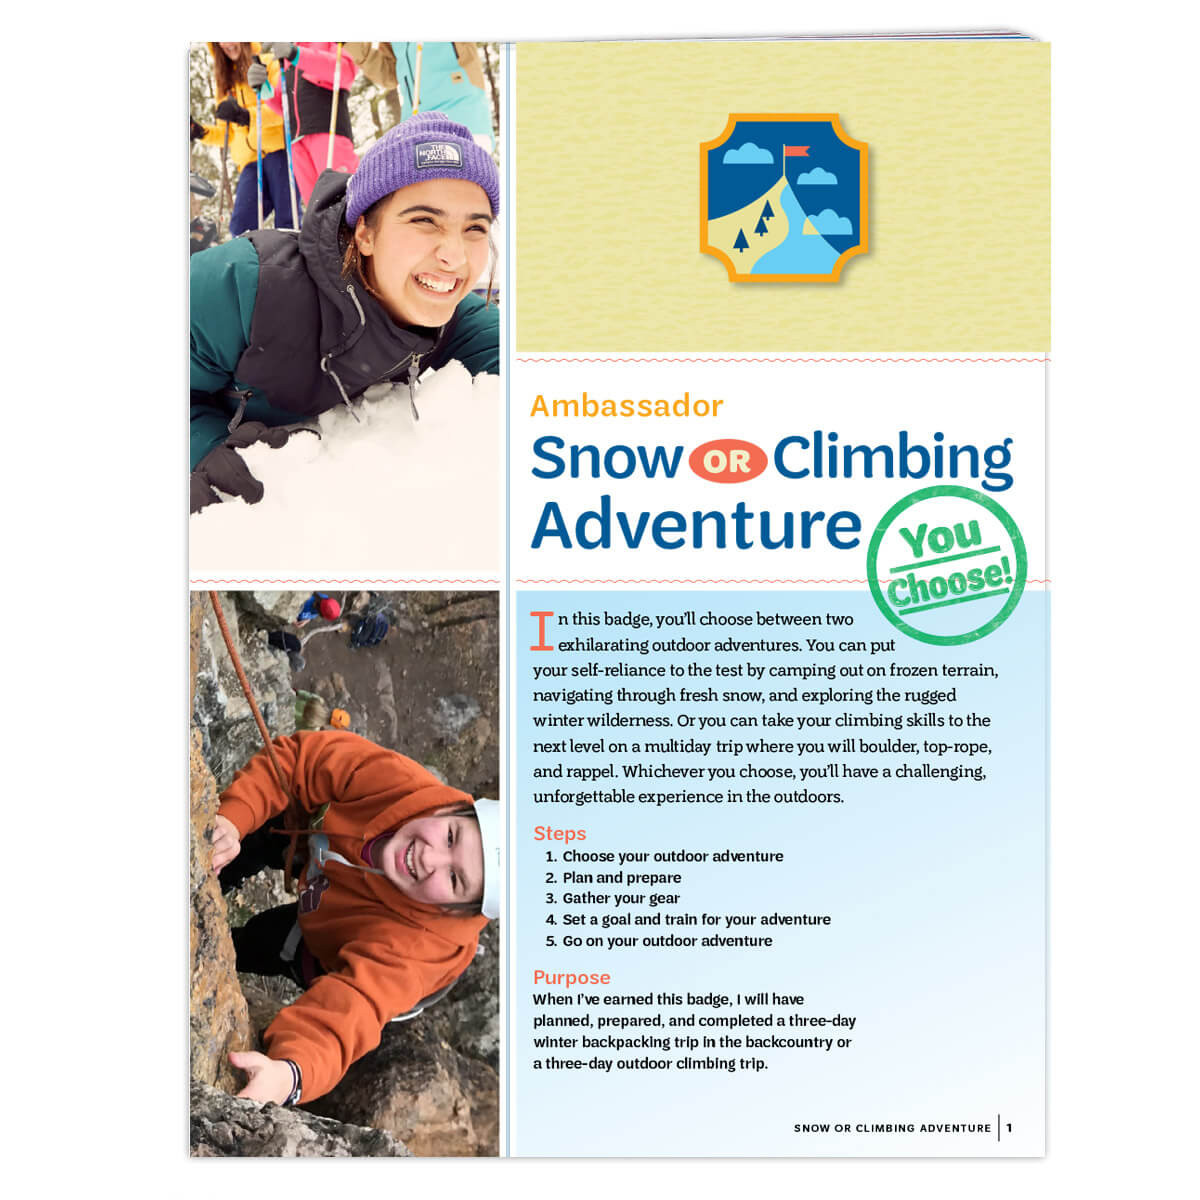 Amb. Snow or Climbing Adventure REQ